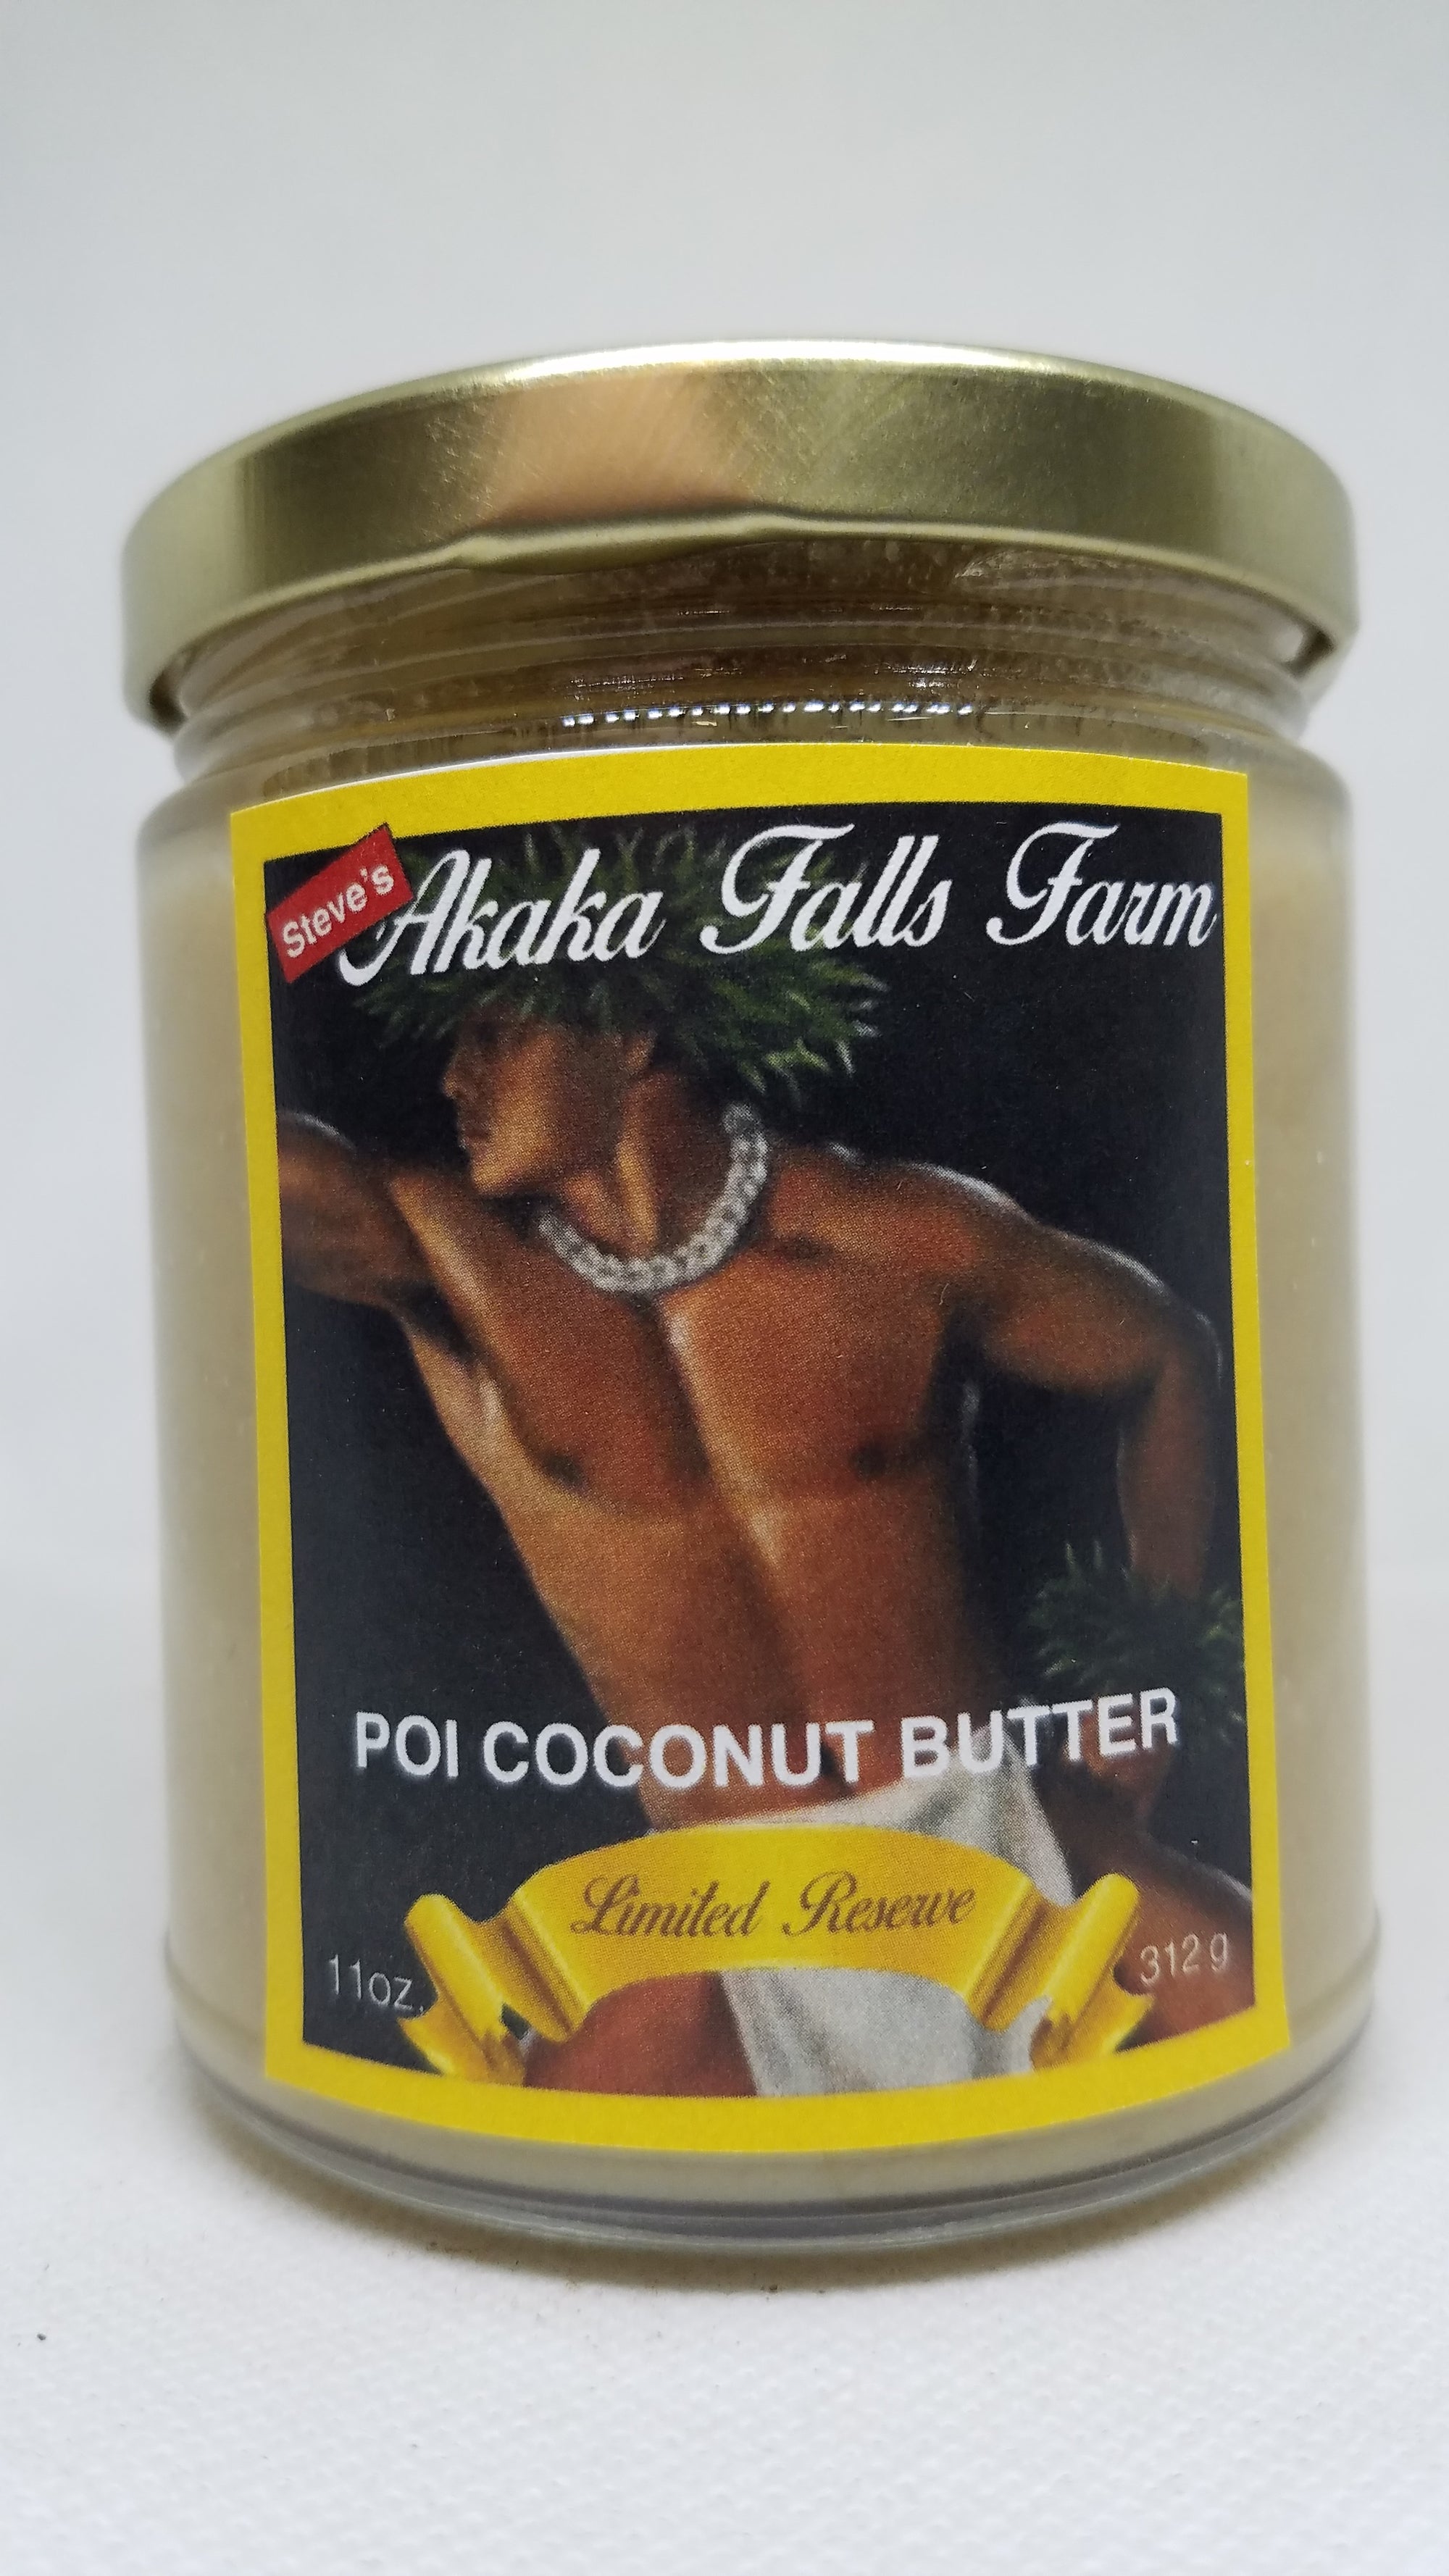 Pop-Up Mākeke - Akaka Falls Farm - Poi Coconut Butter